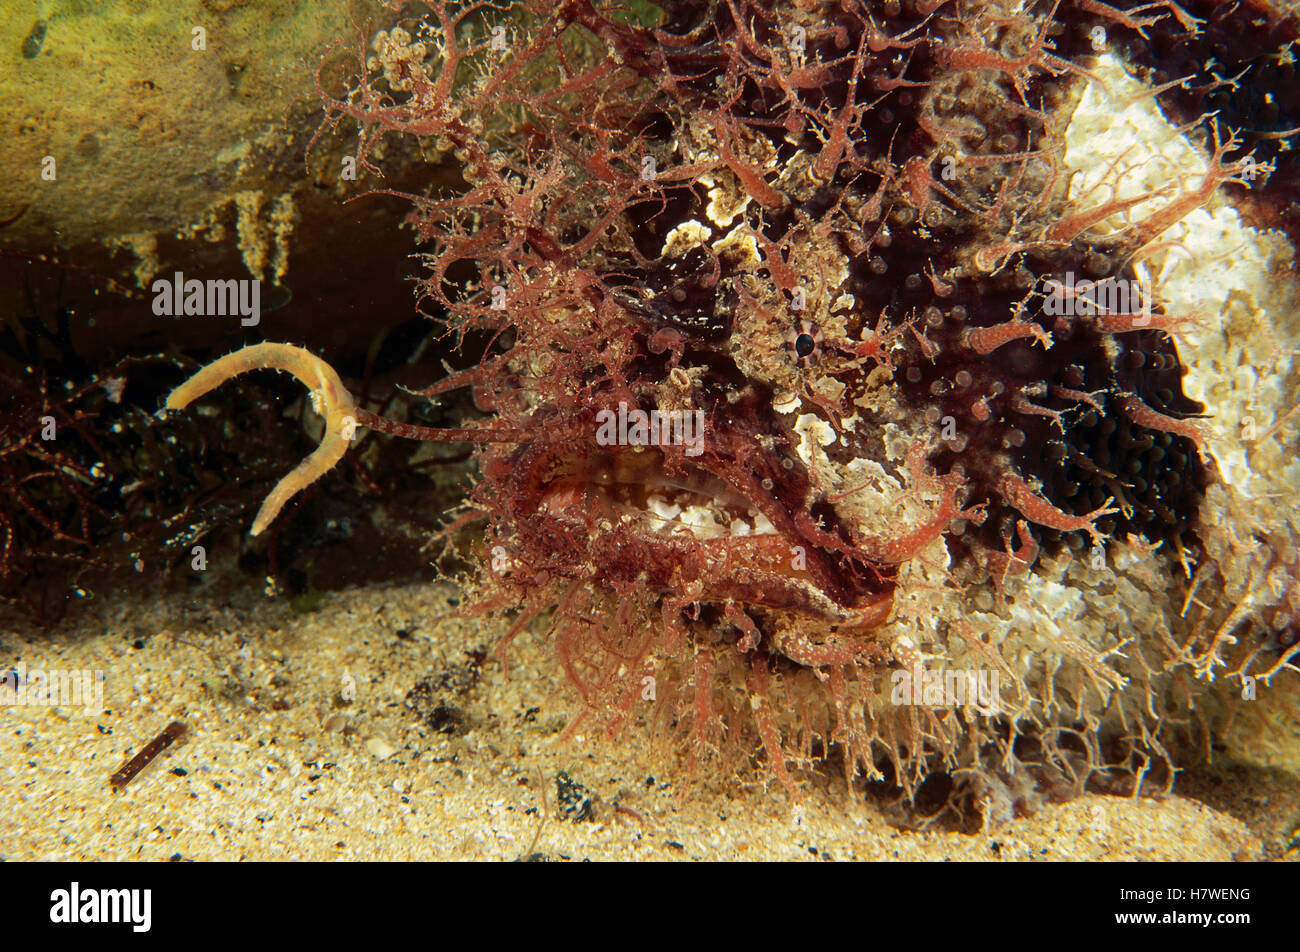 Tasselled Frogfish (Rhycherus filamentosus) hiding in red alge waiting for prey showing lure, Edithburgh, Australia Stock Photo